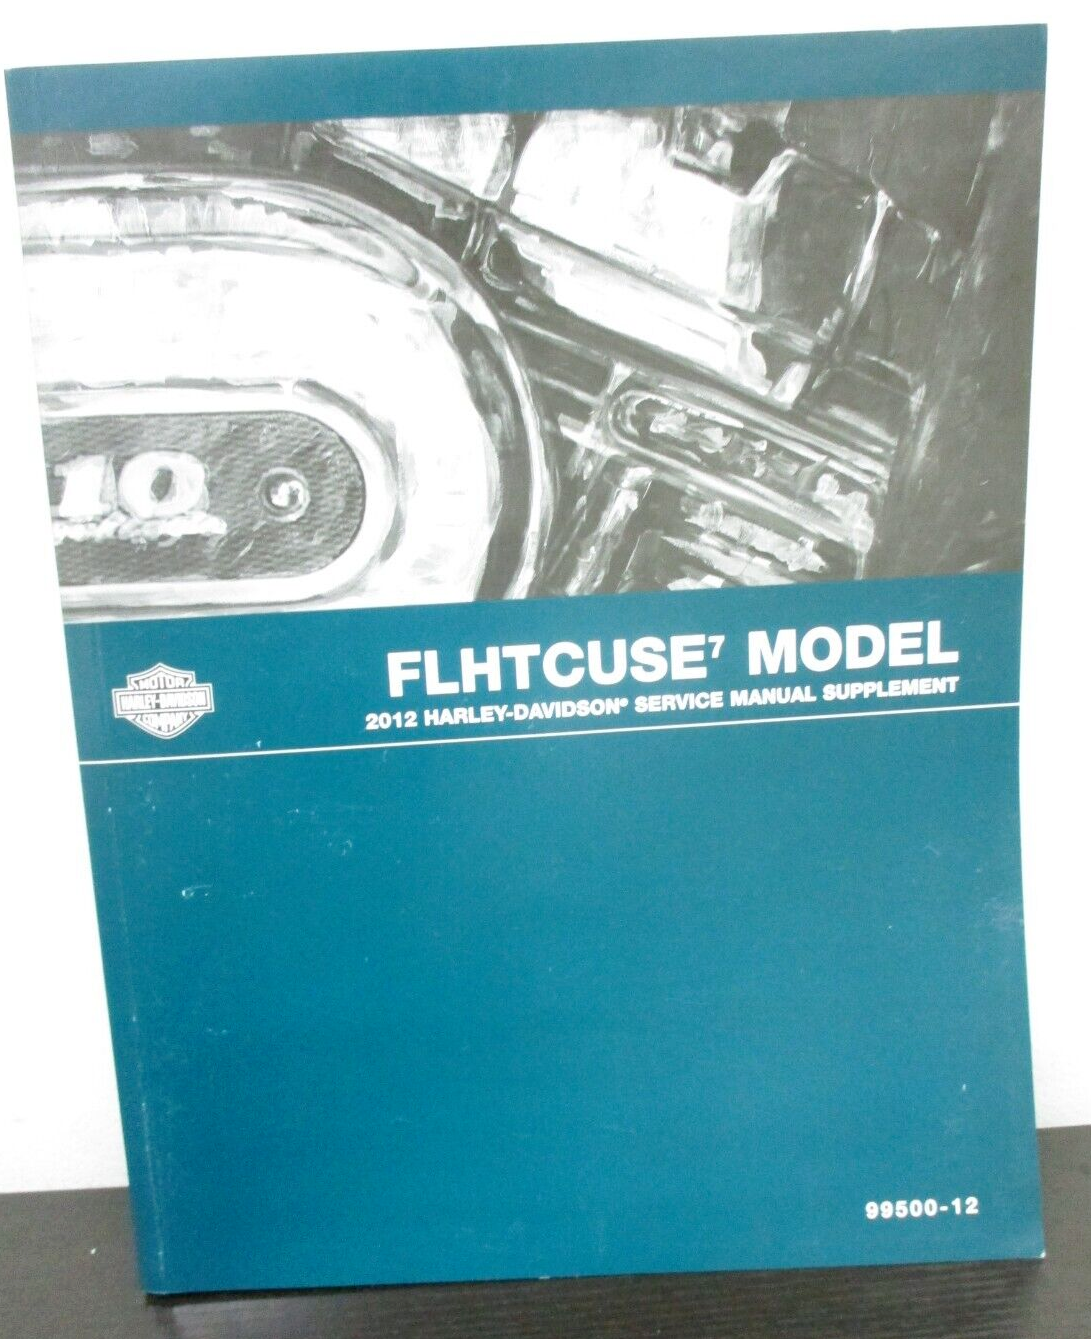 Harley-Davidson 2012 FLHTCUSE7 Model Service Manual Supplement 99500-12